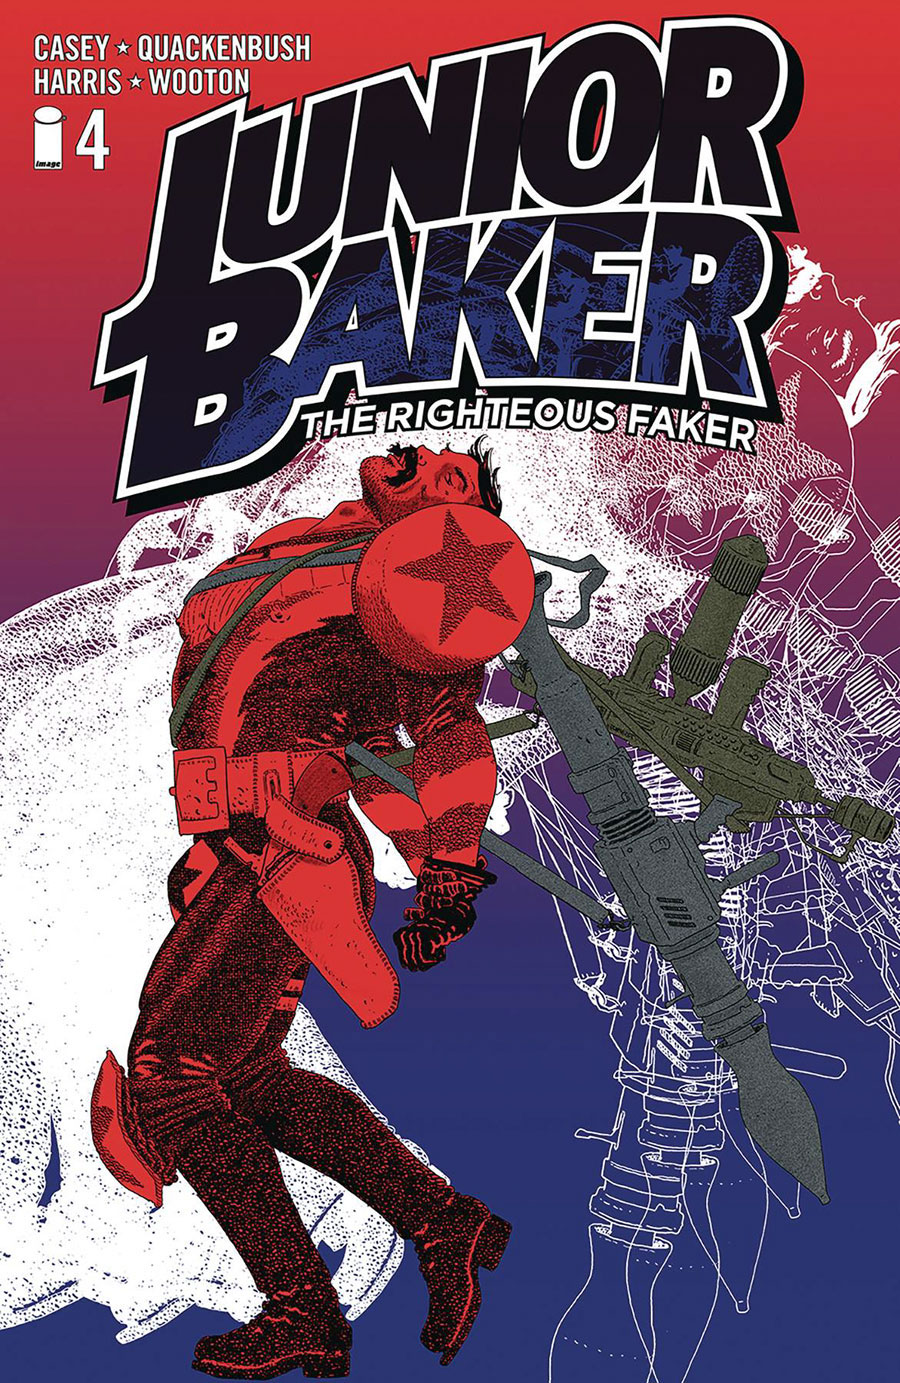 Junior Baker The Righteous Faker #4 Cover C Incentive Ian MacEwan & Sonia Harris Variant Cover